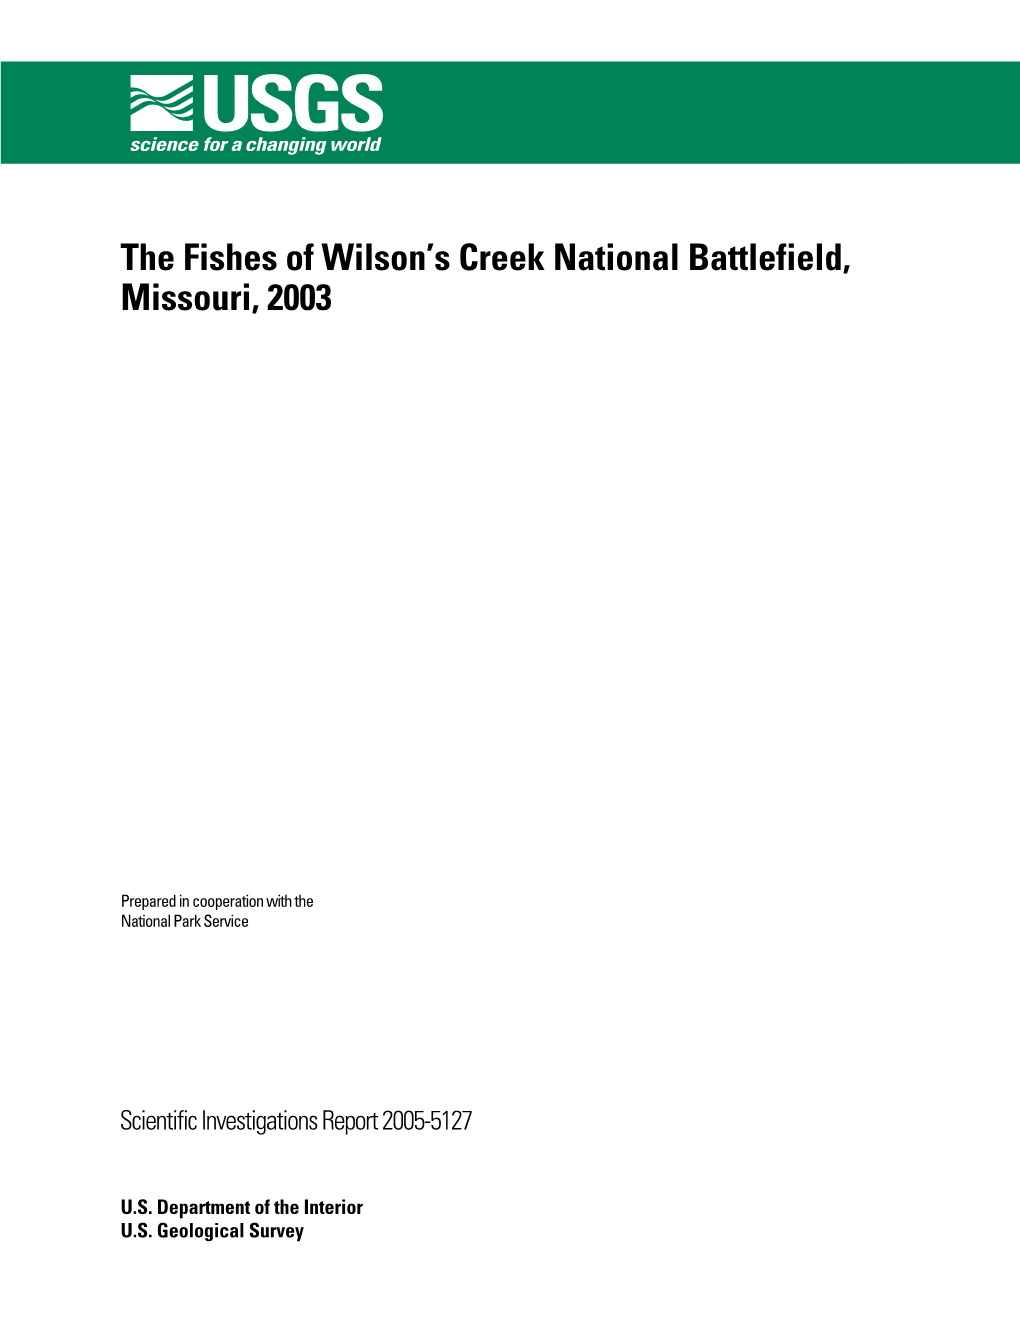 The Fishes of Wilson's Creek National Battlefield, Missouri, 2003